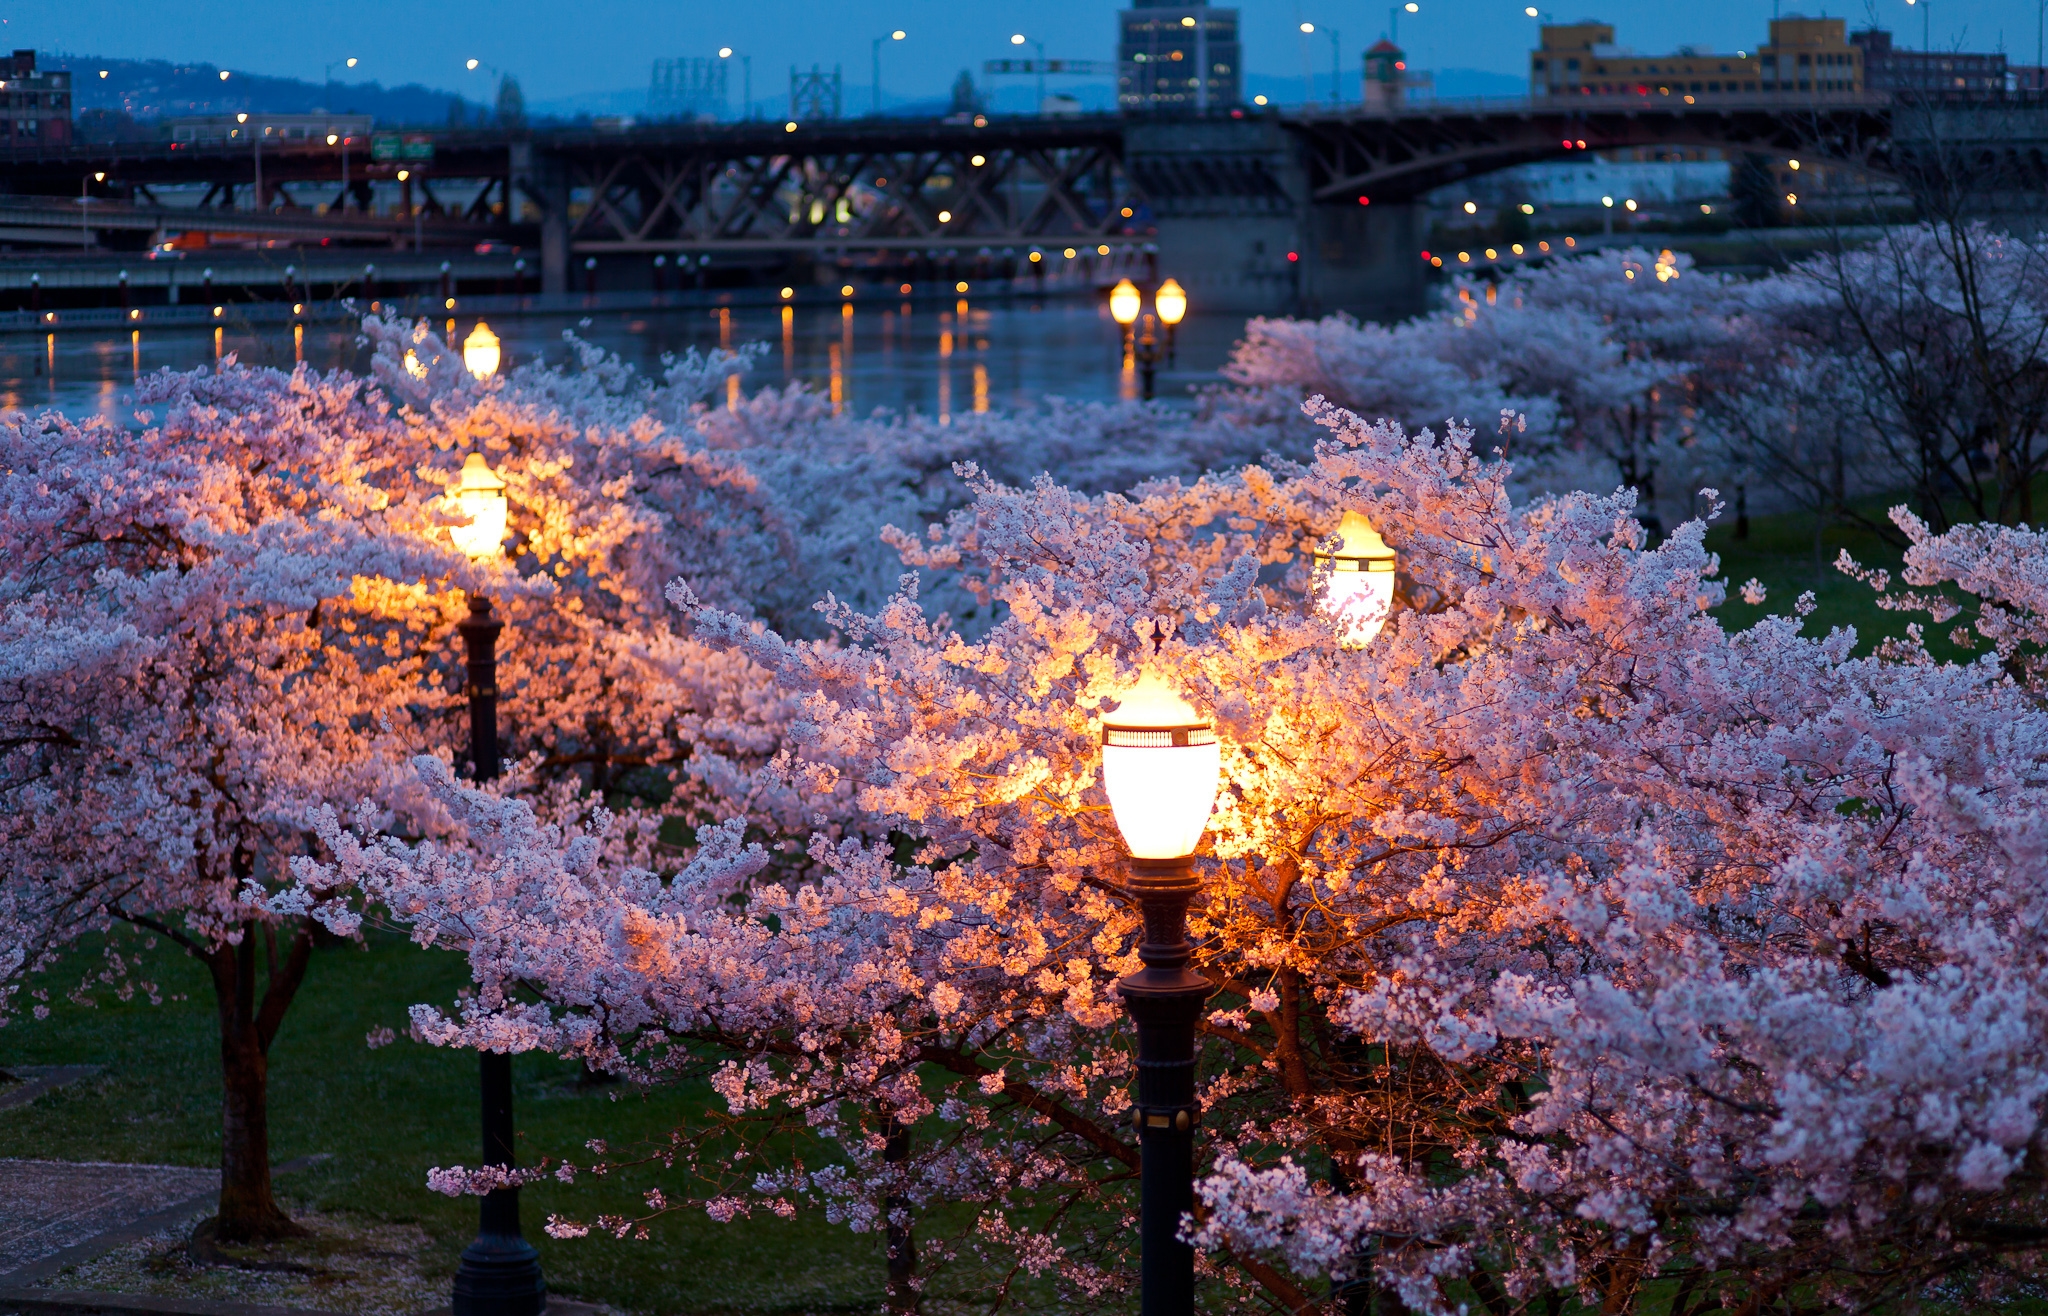 bloom, evening, cities, rivers, bridges, trees, night, city, lights, park, lanterns, color, spring 32K